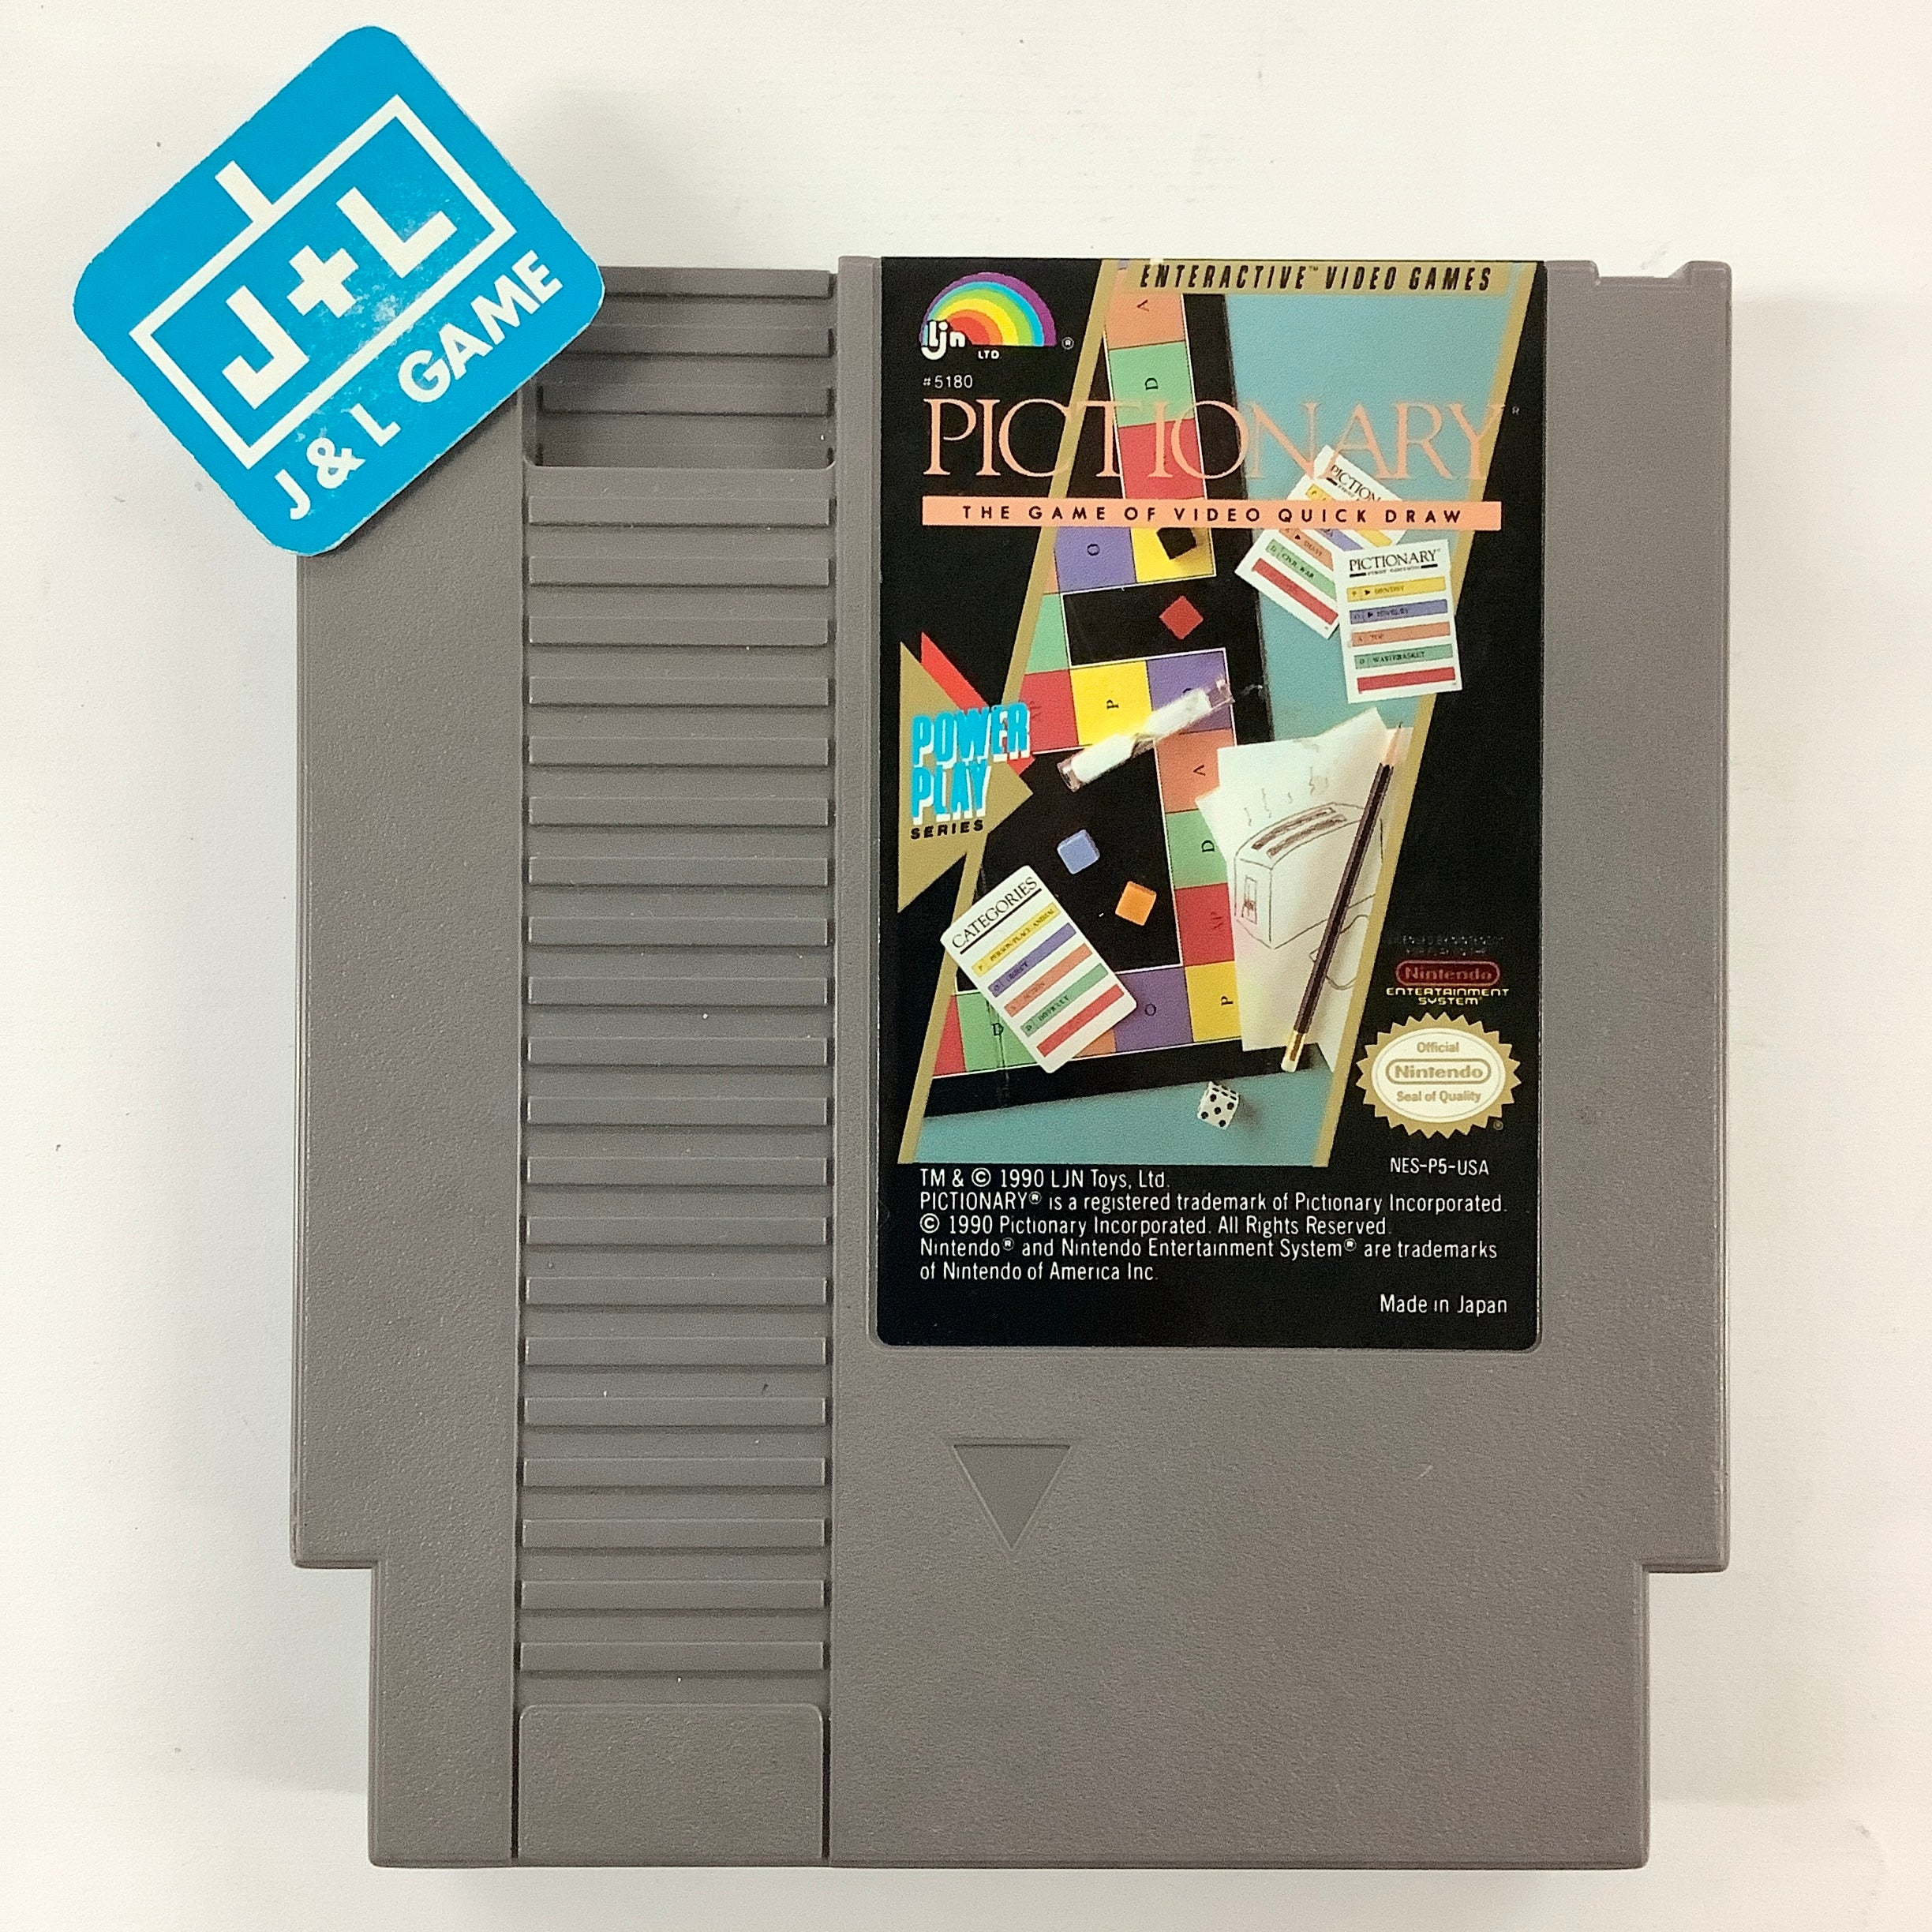 Pictionary - (NES) Nintendo Entertainment System [Pre-Owned] Video Games LJN Ltd.   